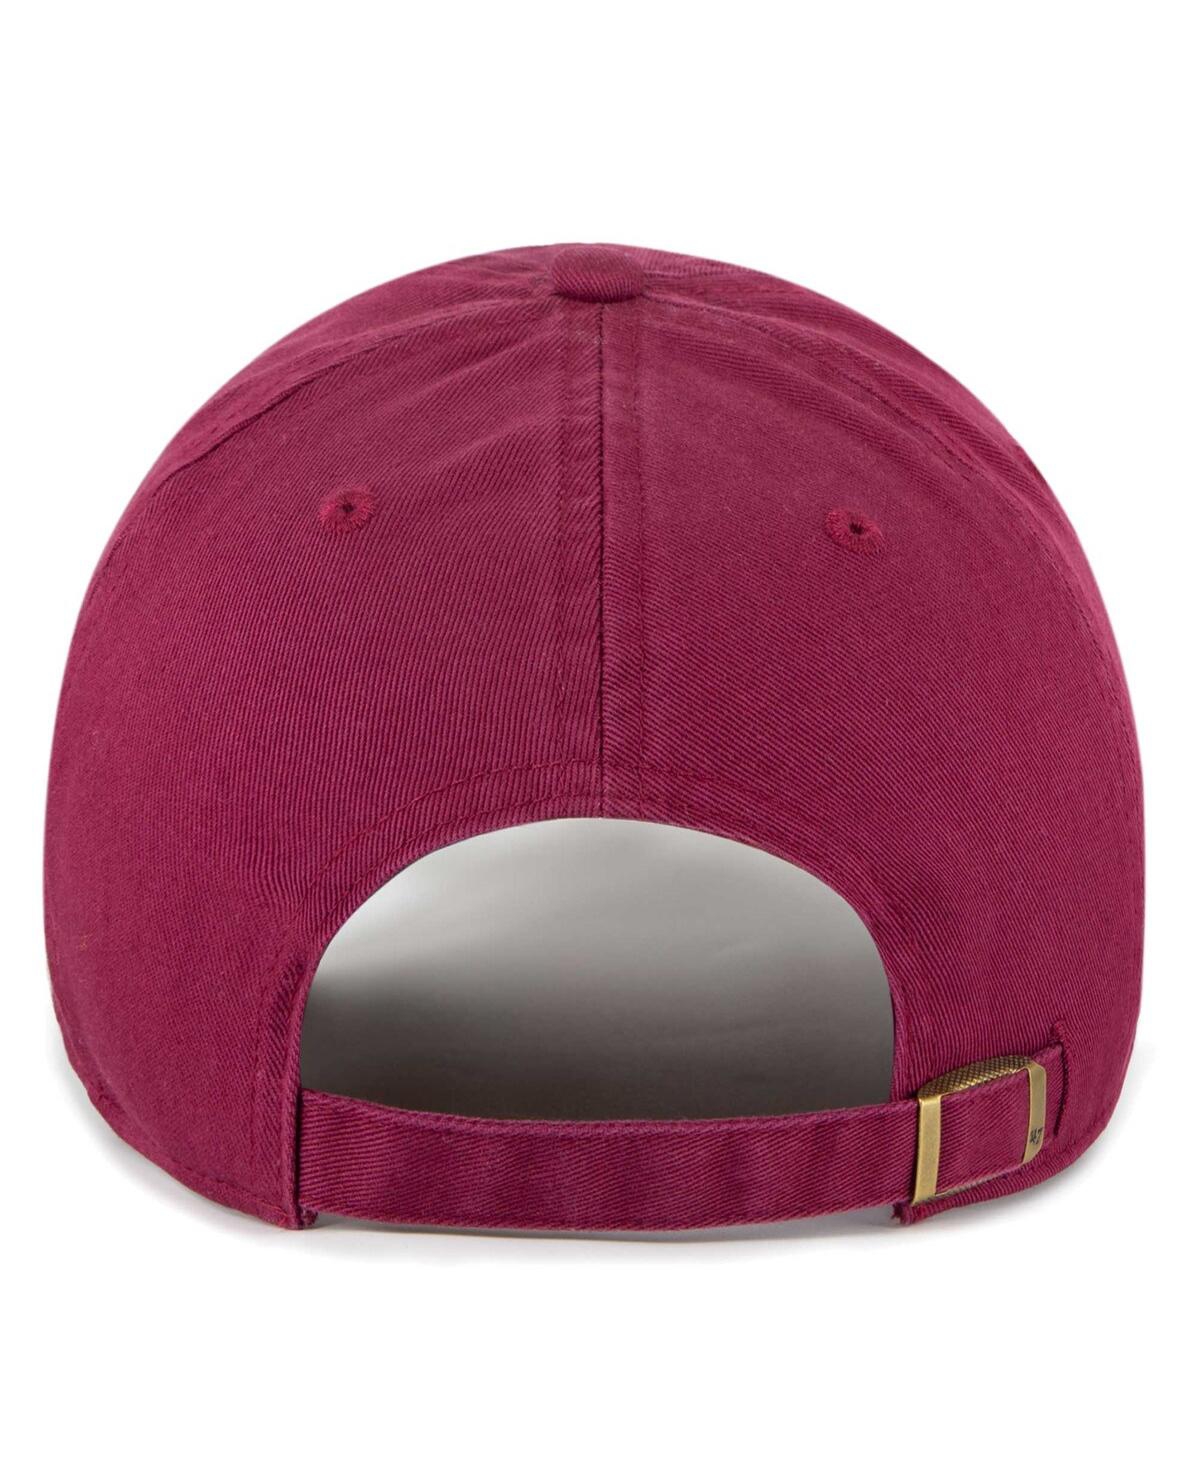 Shop 47 Brand Women's ' Burgundy Washington Commanders Confetti Icon Clean Up Adjustable Hat